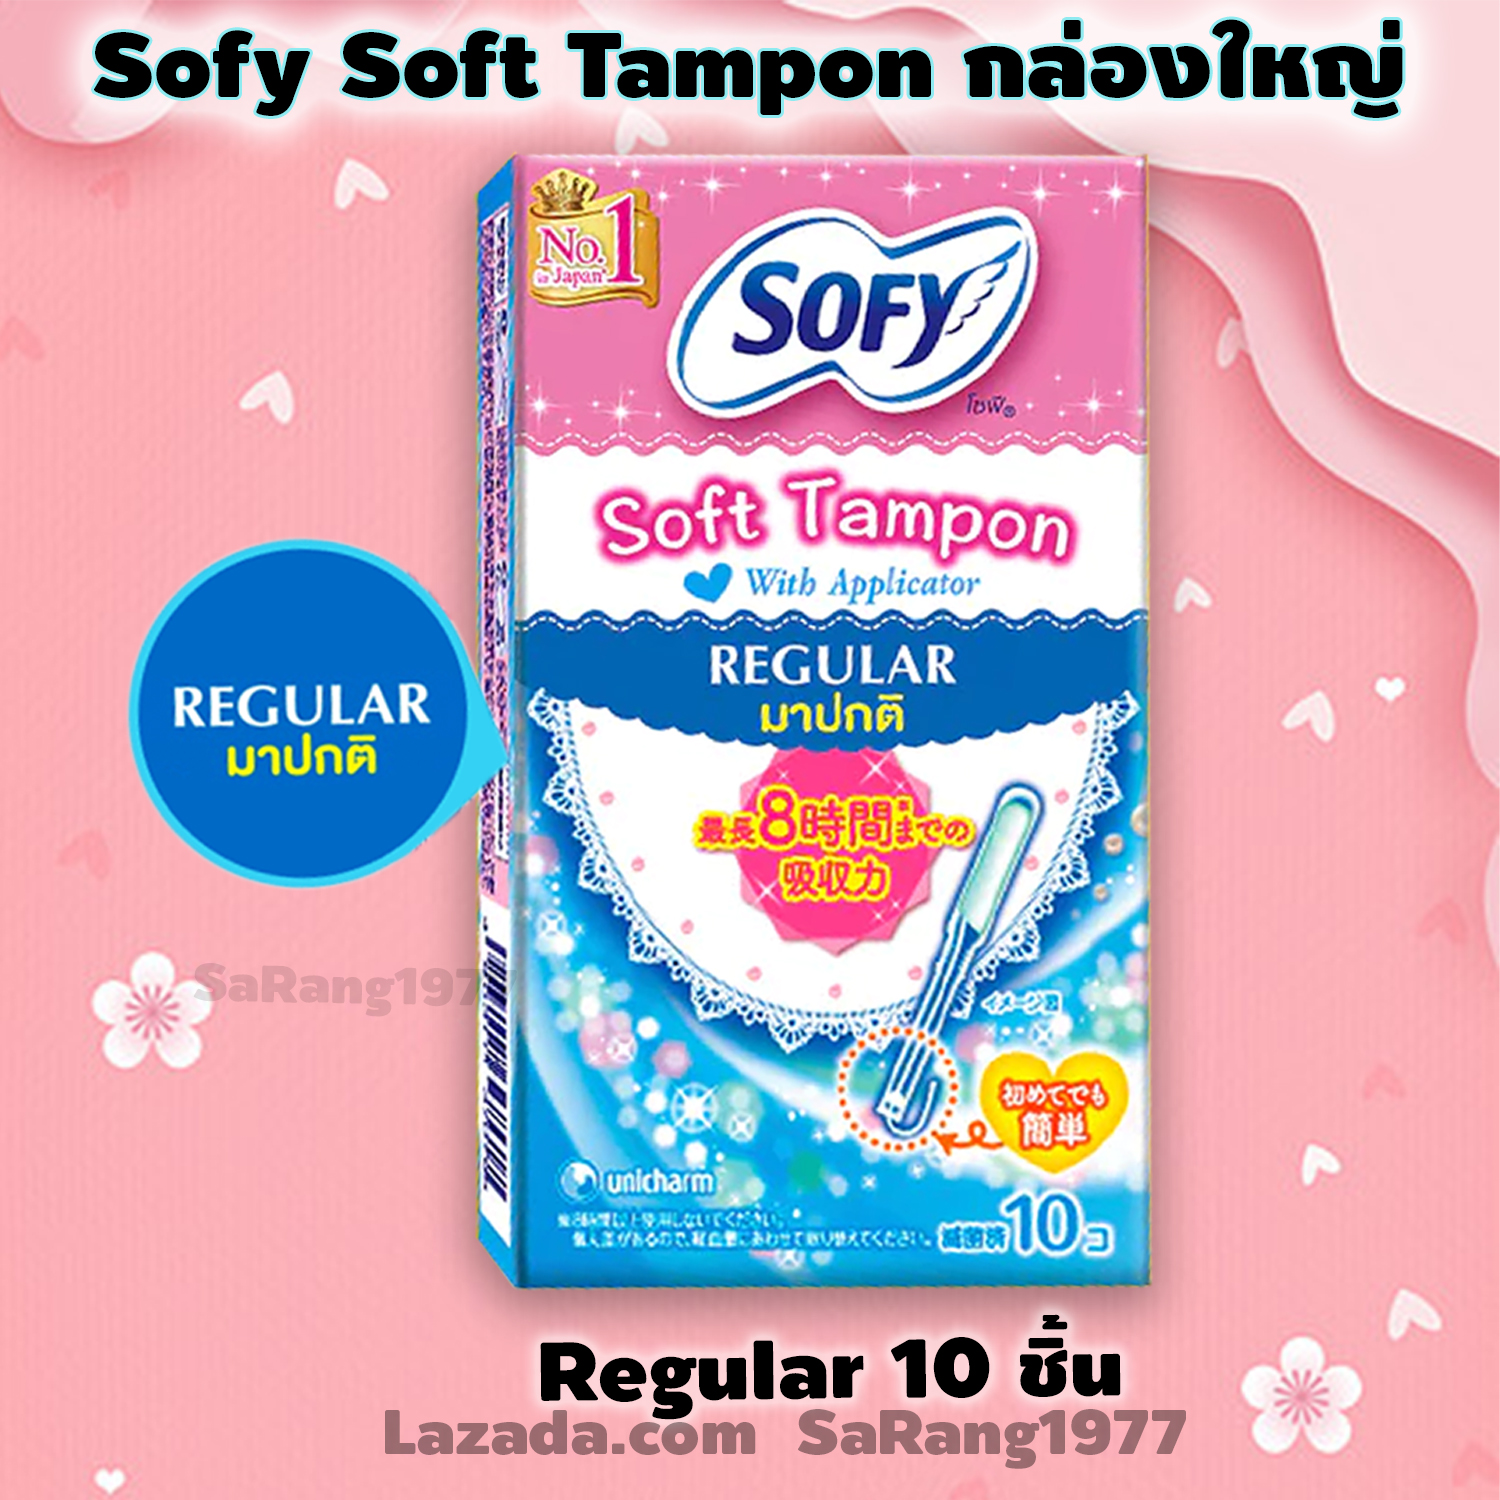 Sofy Soft Tampon with Applicator ผ้าอนามัยแบบสอดกล่องใหญ่ สำหรับวันมาปกติ Regular รุ่น 10 ชิ้น